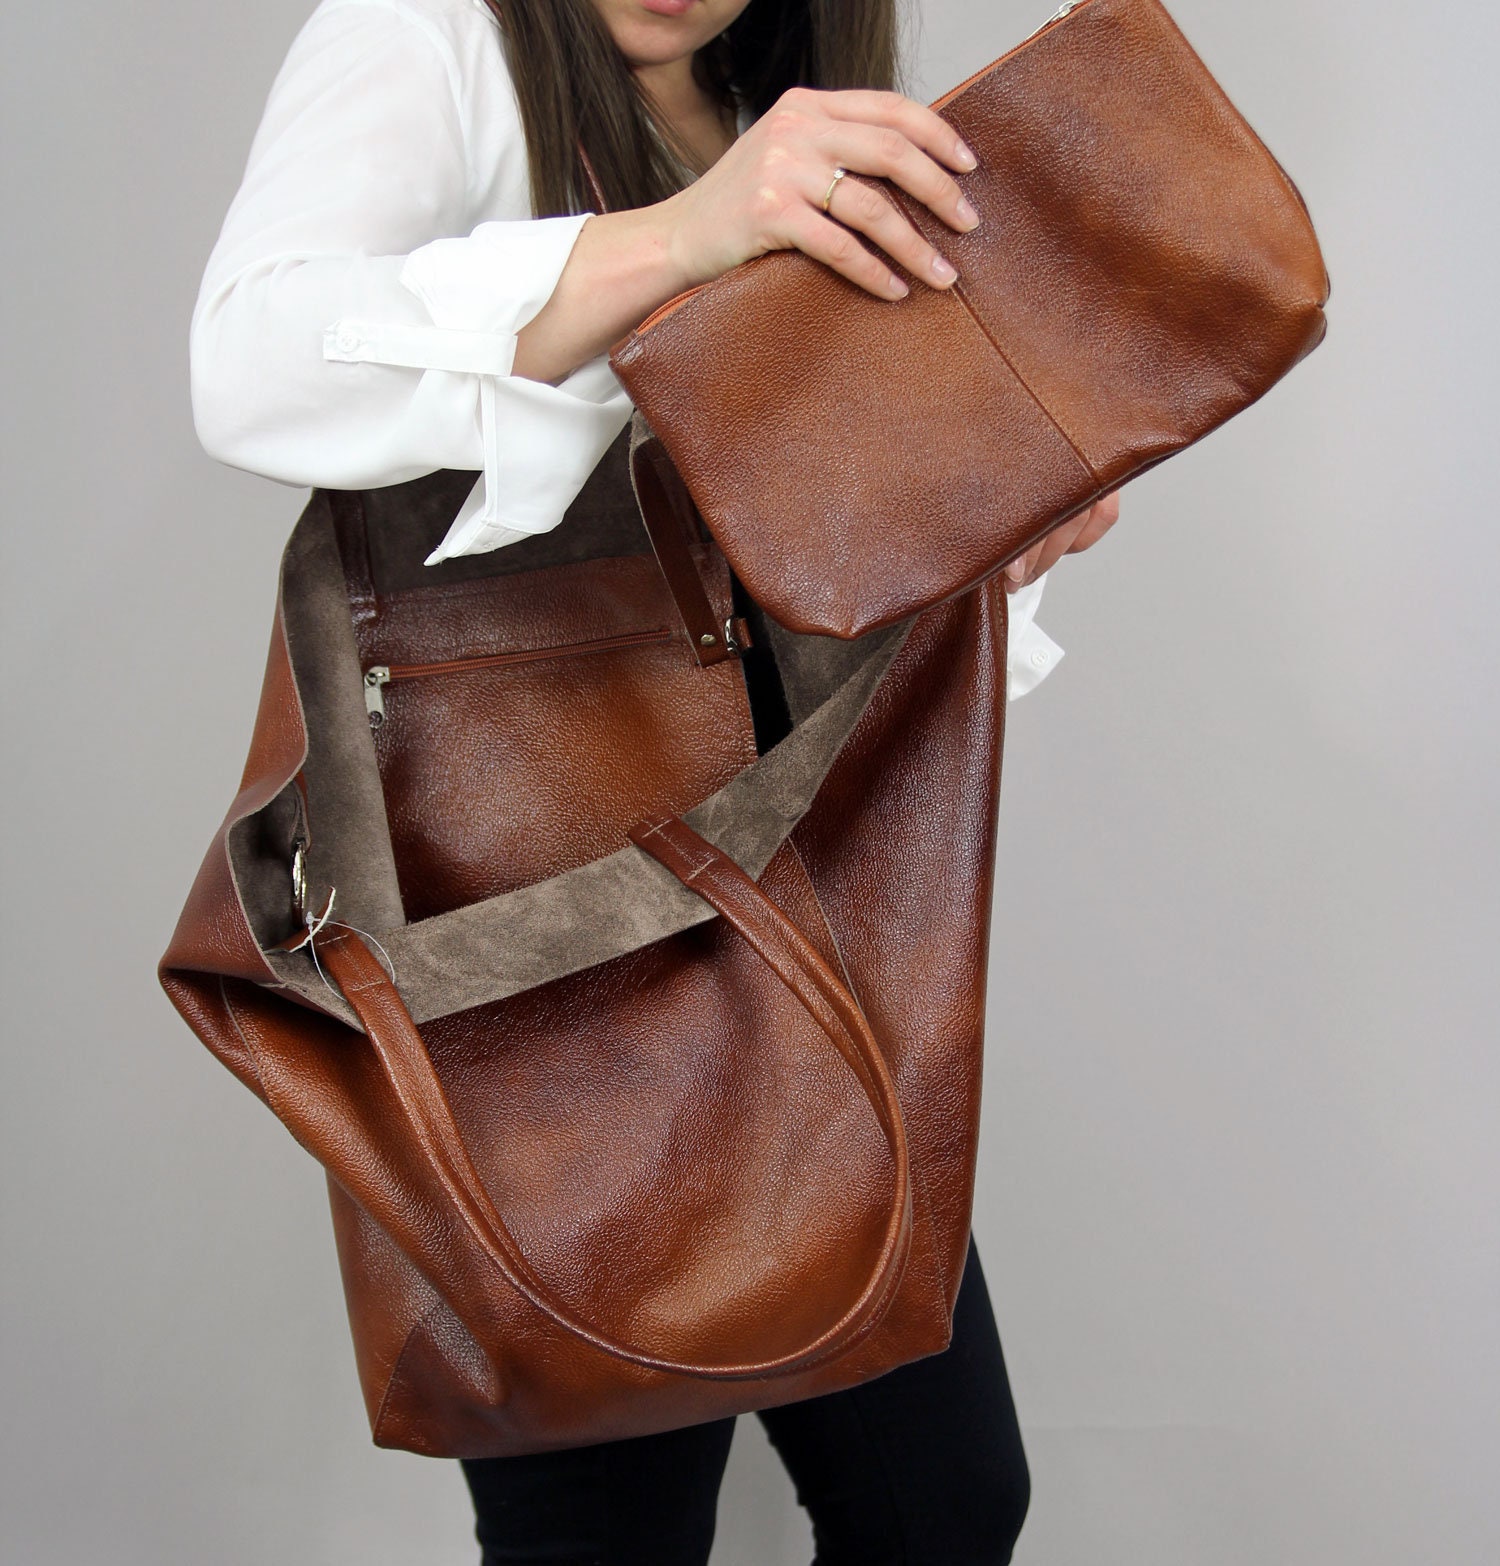 ACS Genuine Leather Handbag, Leather Tote Bag, Leather Purse, Slouchy Handbag Shoulder Bag, Leather Shopper Bag